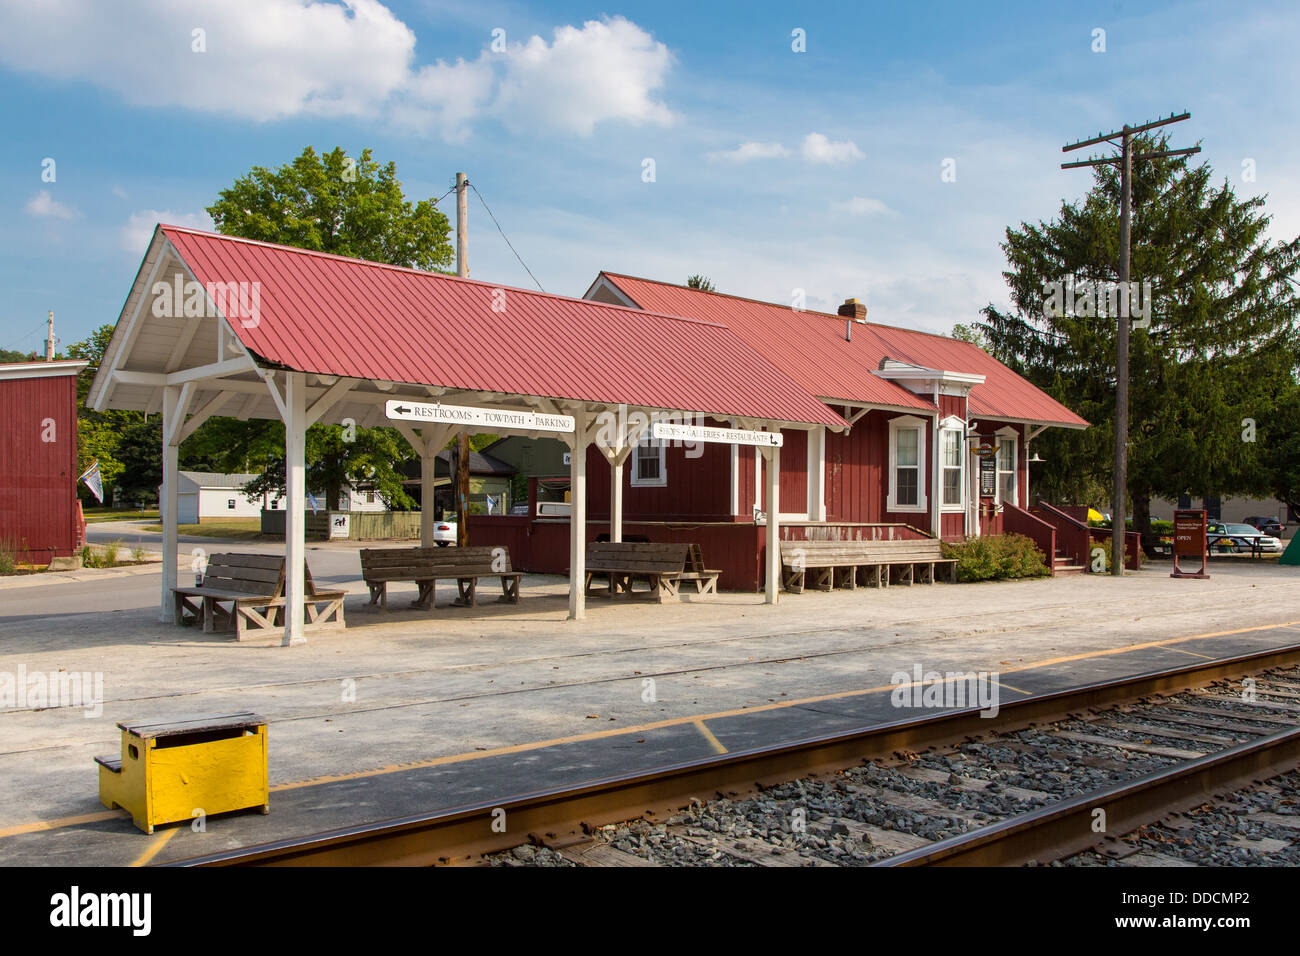 Halbinsel Packstation des Cuyahoga Valley Scenic Railroad im Cuyahoga Valley National Park in Ohio in den Vereinigten Staaten Stockfoto